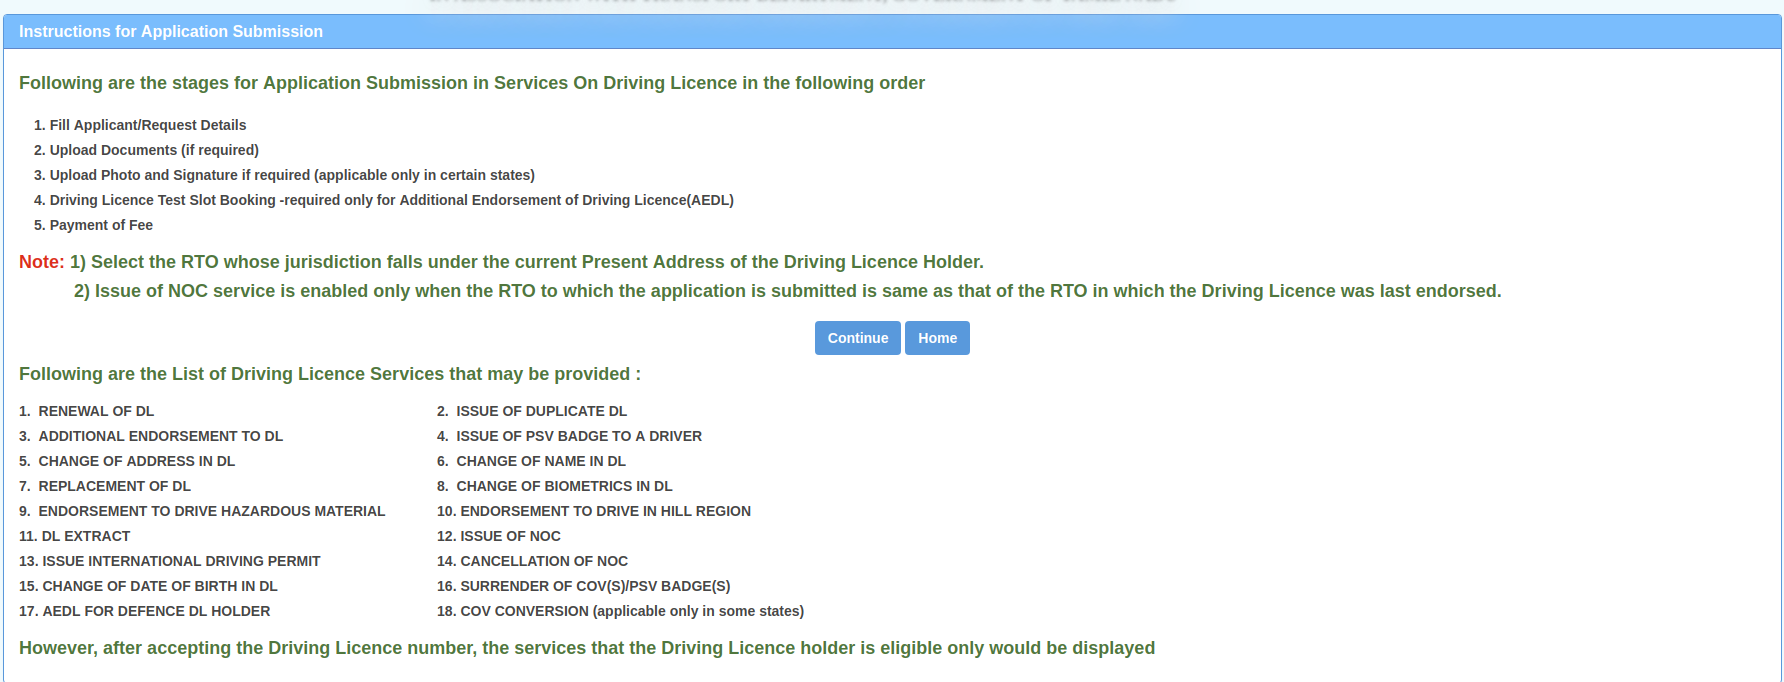 Driving Licence Renewal - Image 3